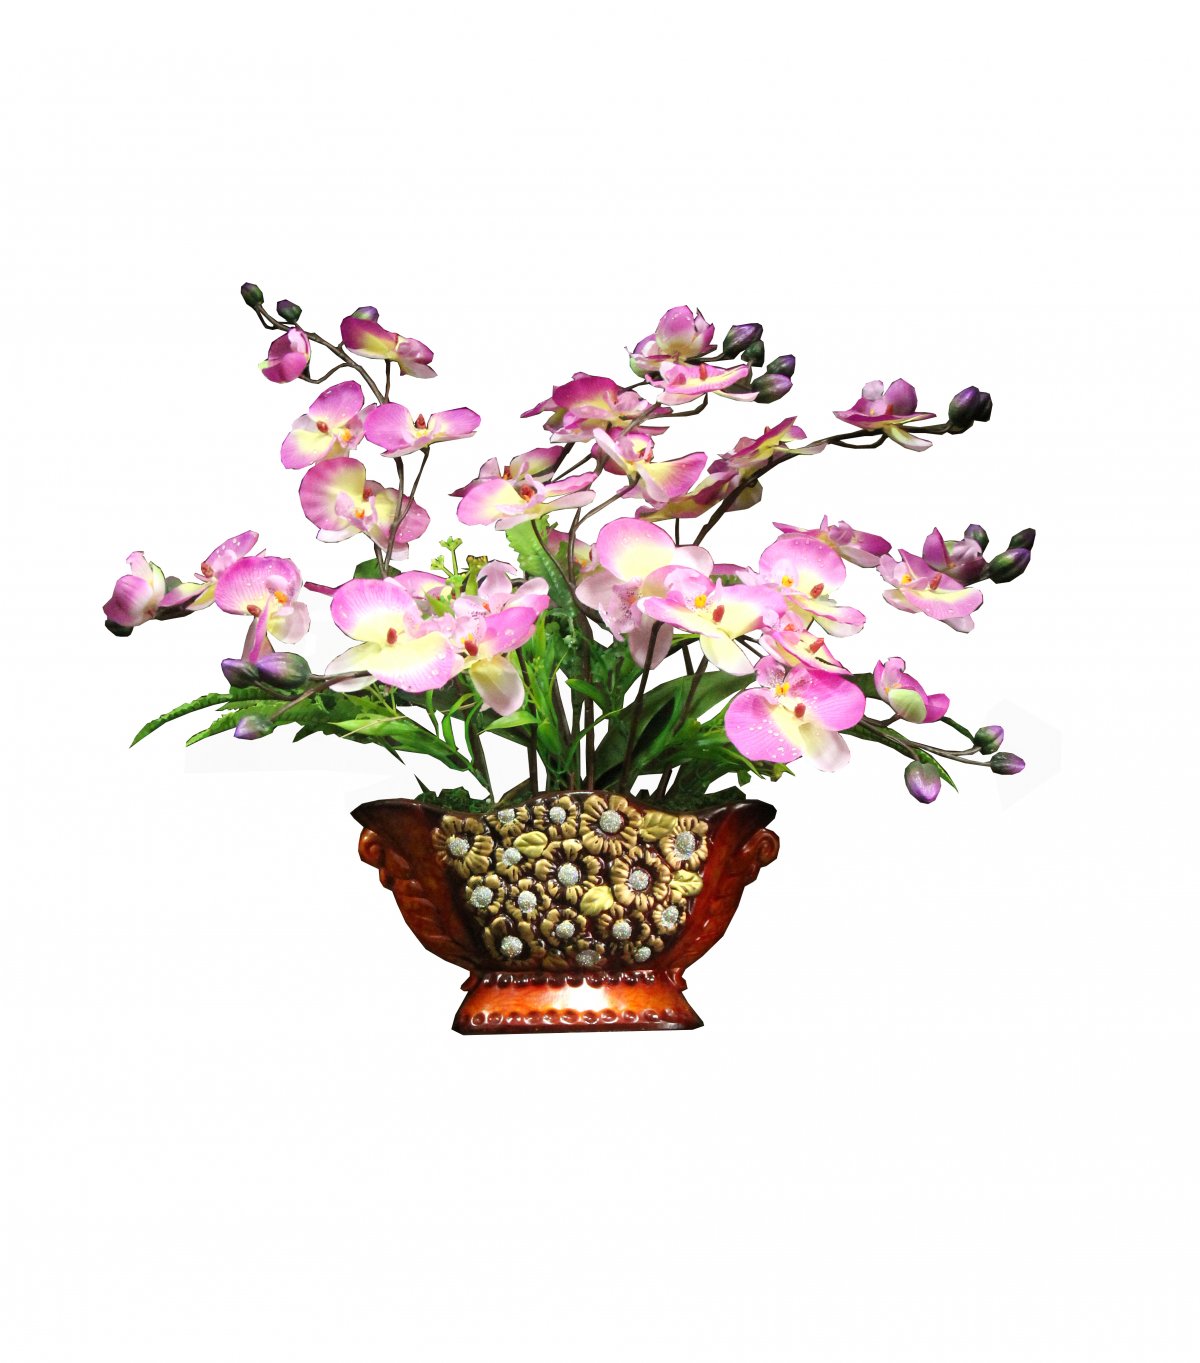 Phalaenopsis pictures